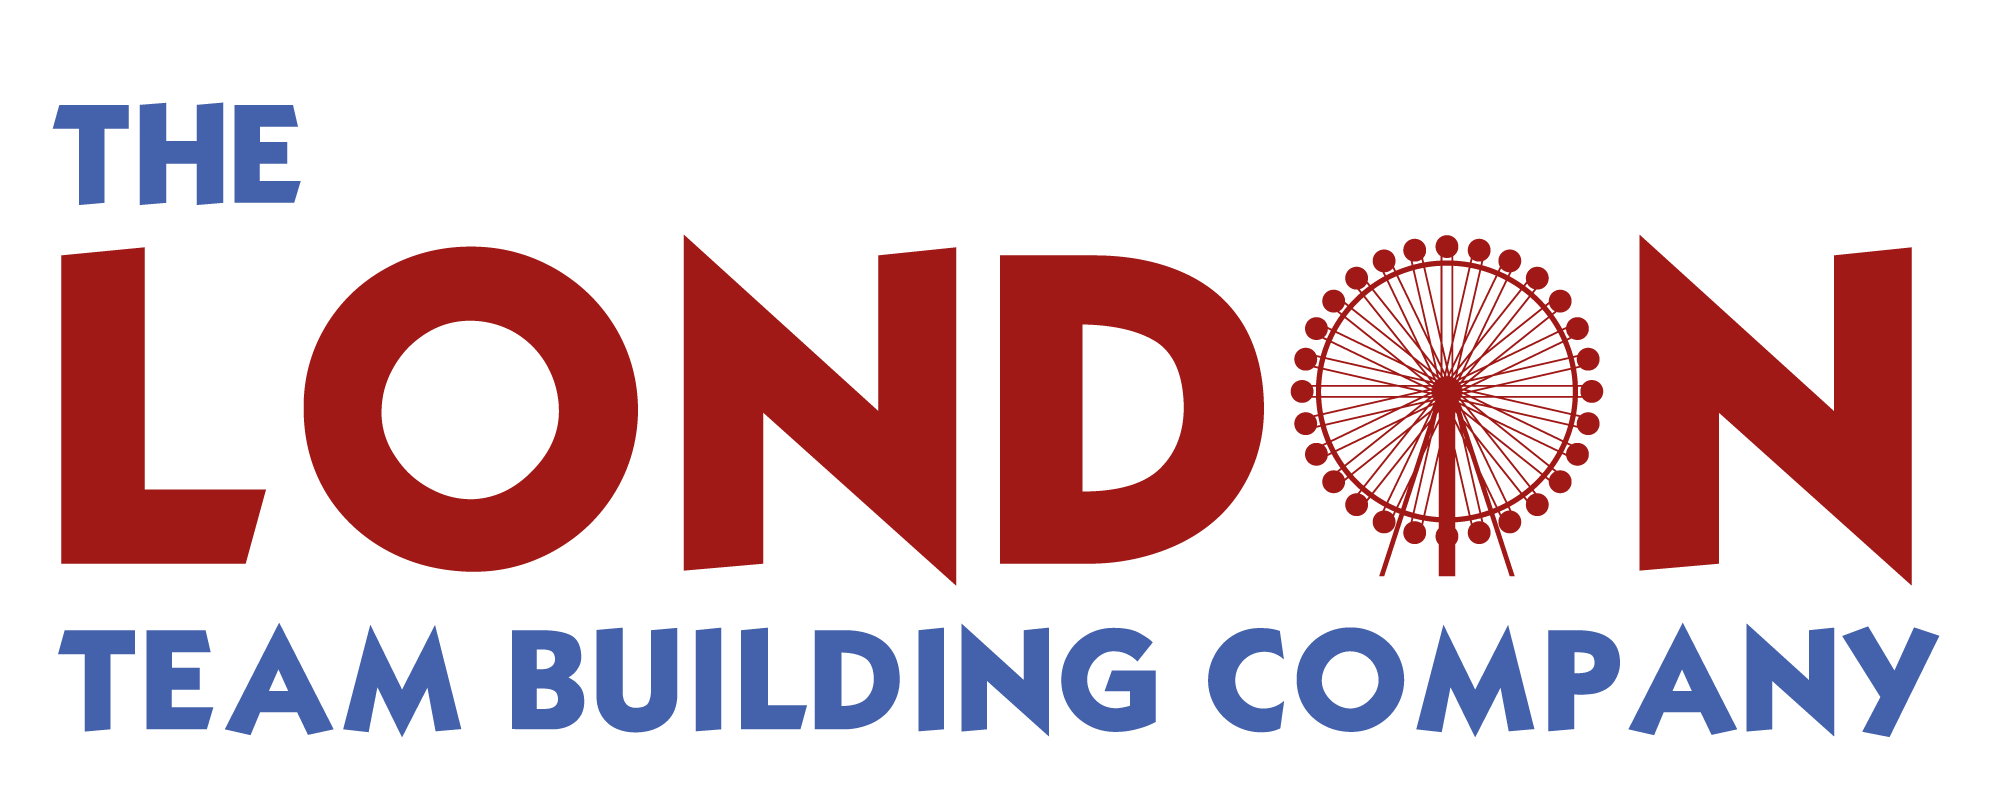 The London Team Building Company Logo